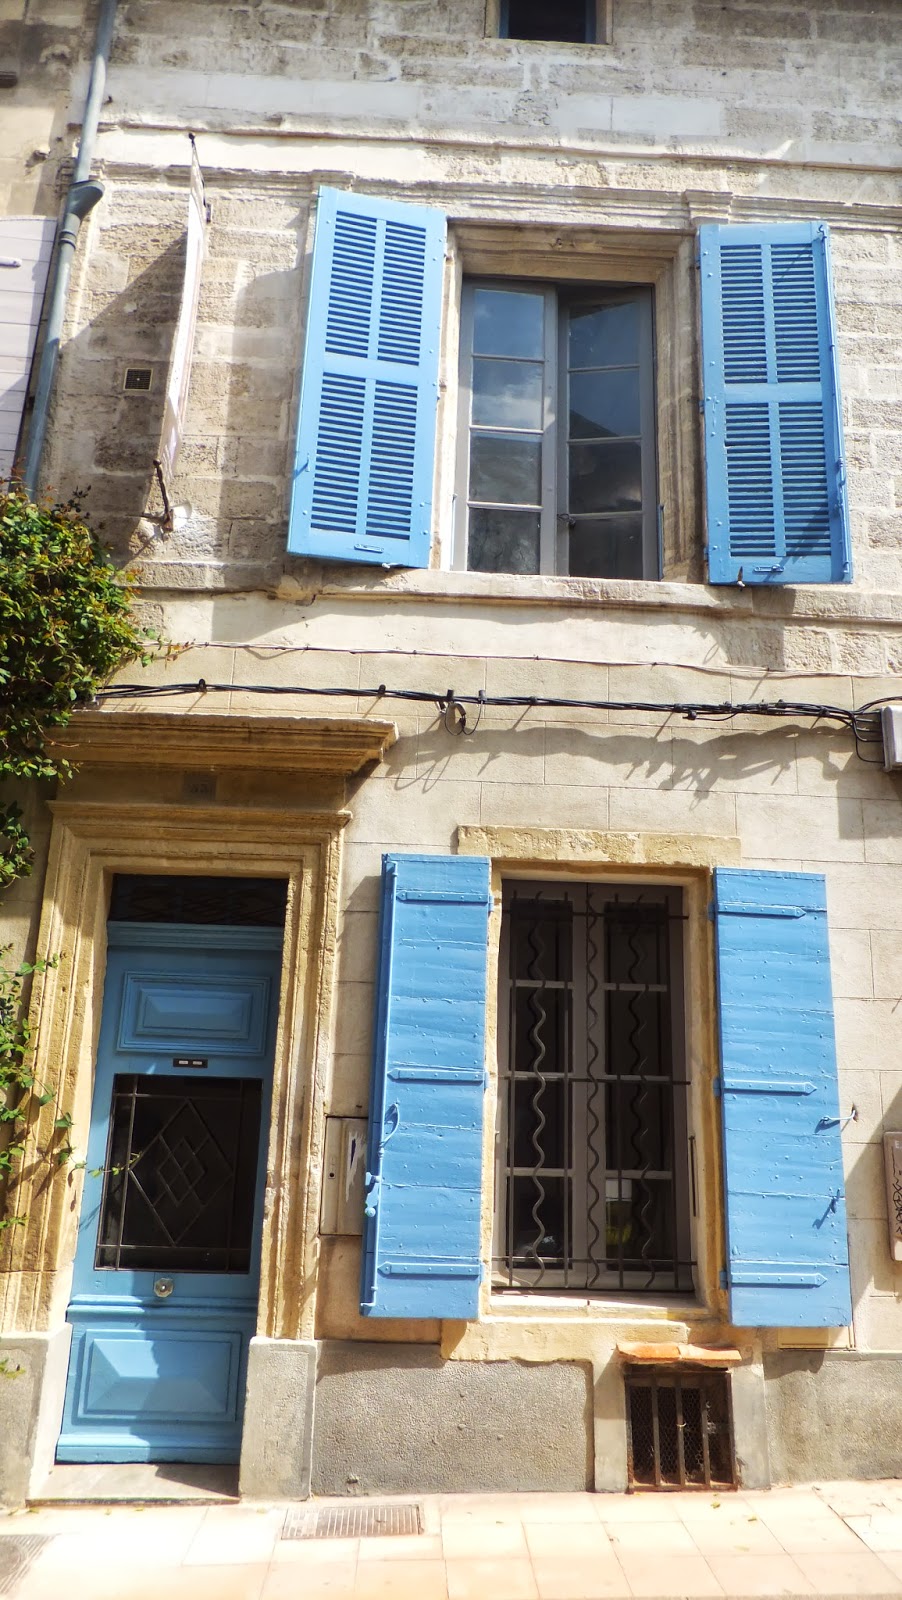 Arles, Provence, Fancia, Elisa N, Blog de Viajes, Lifestyle, Travel